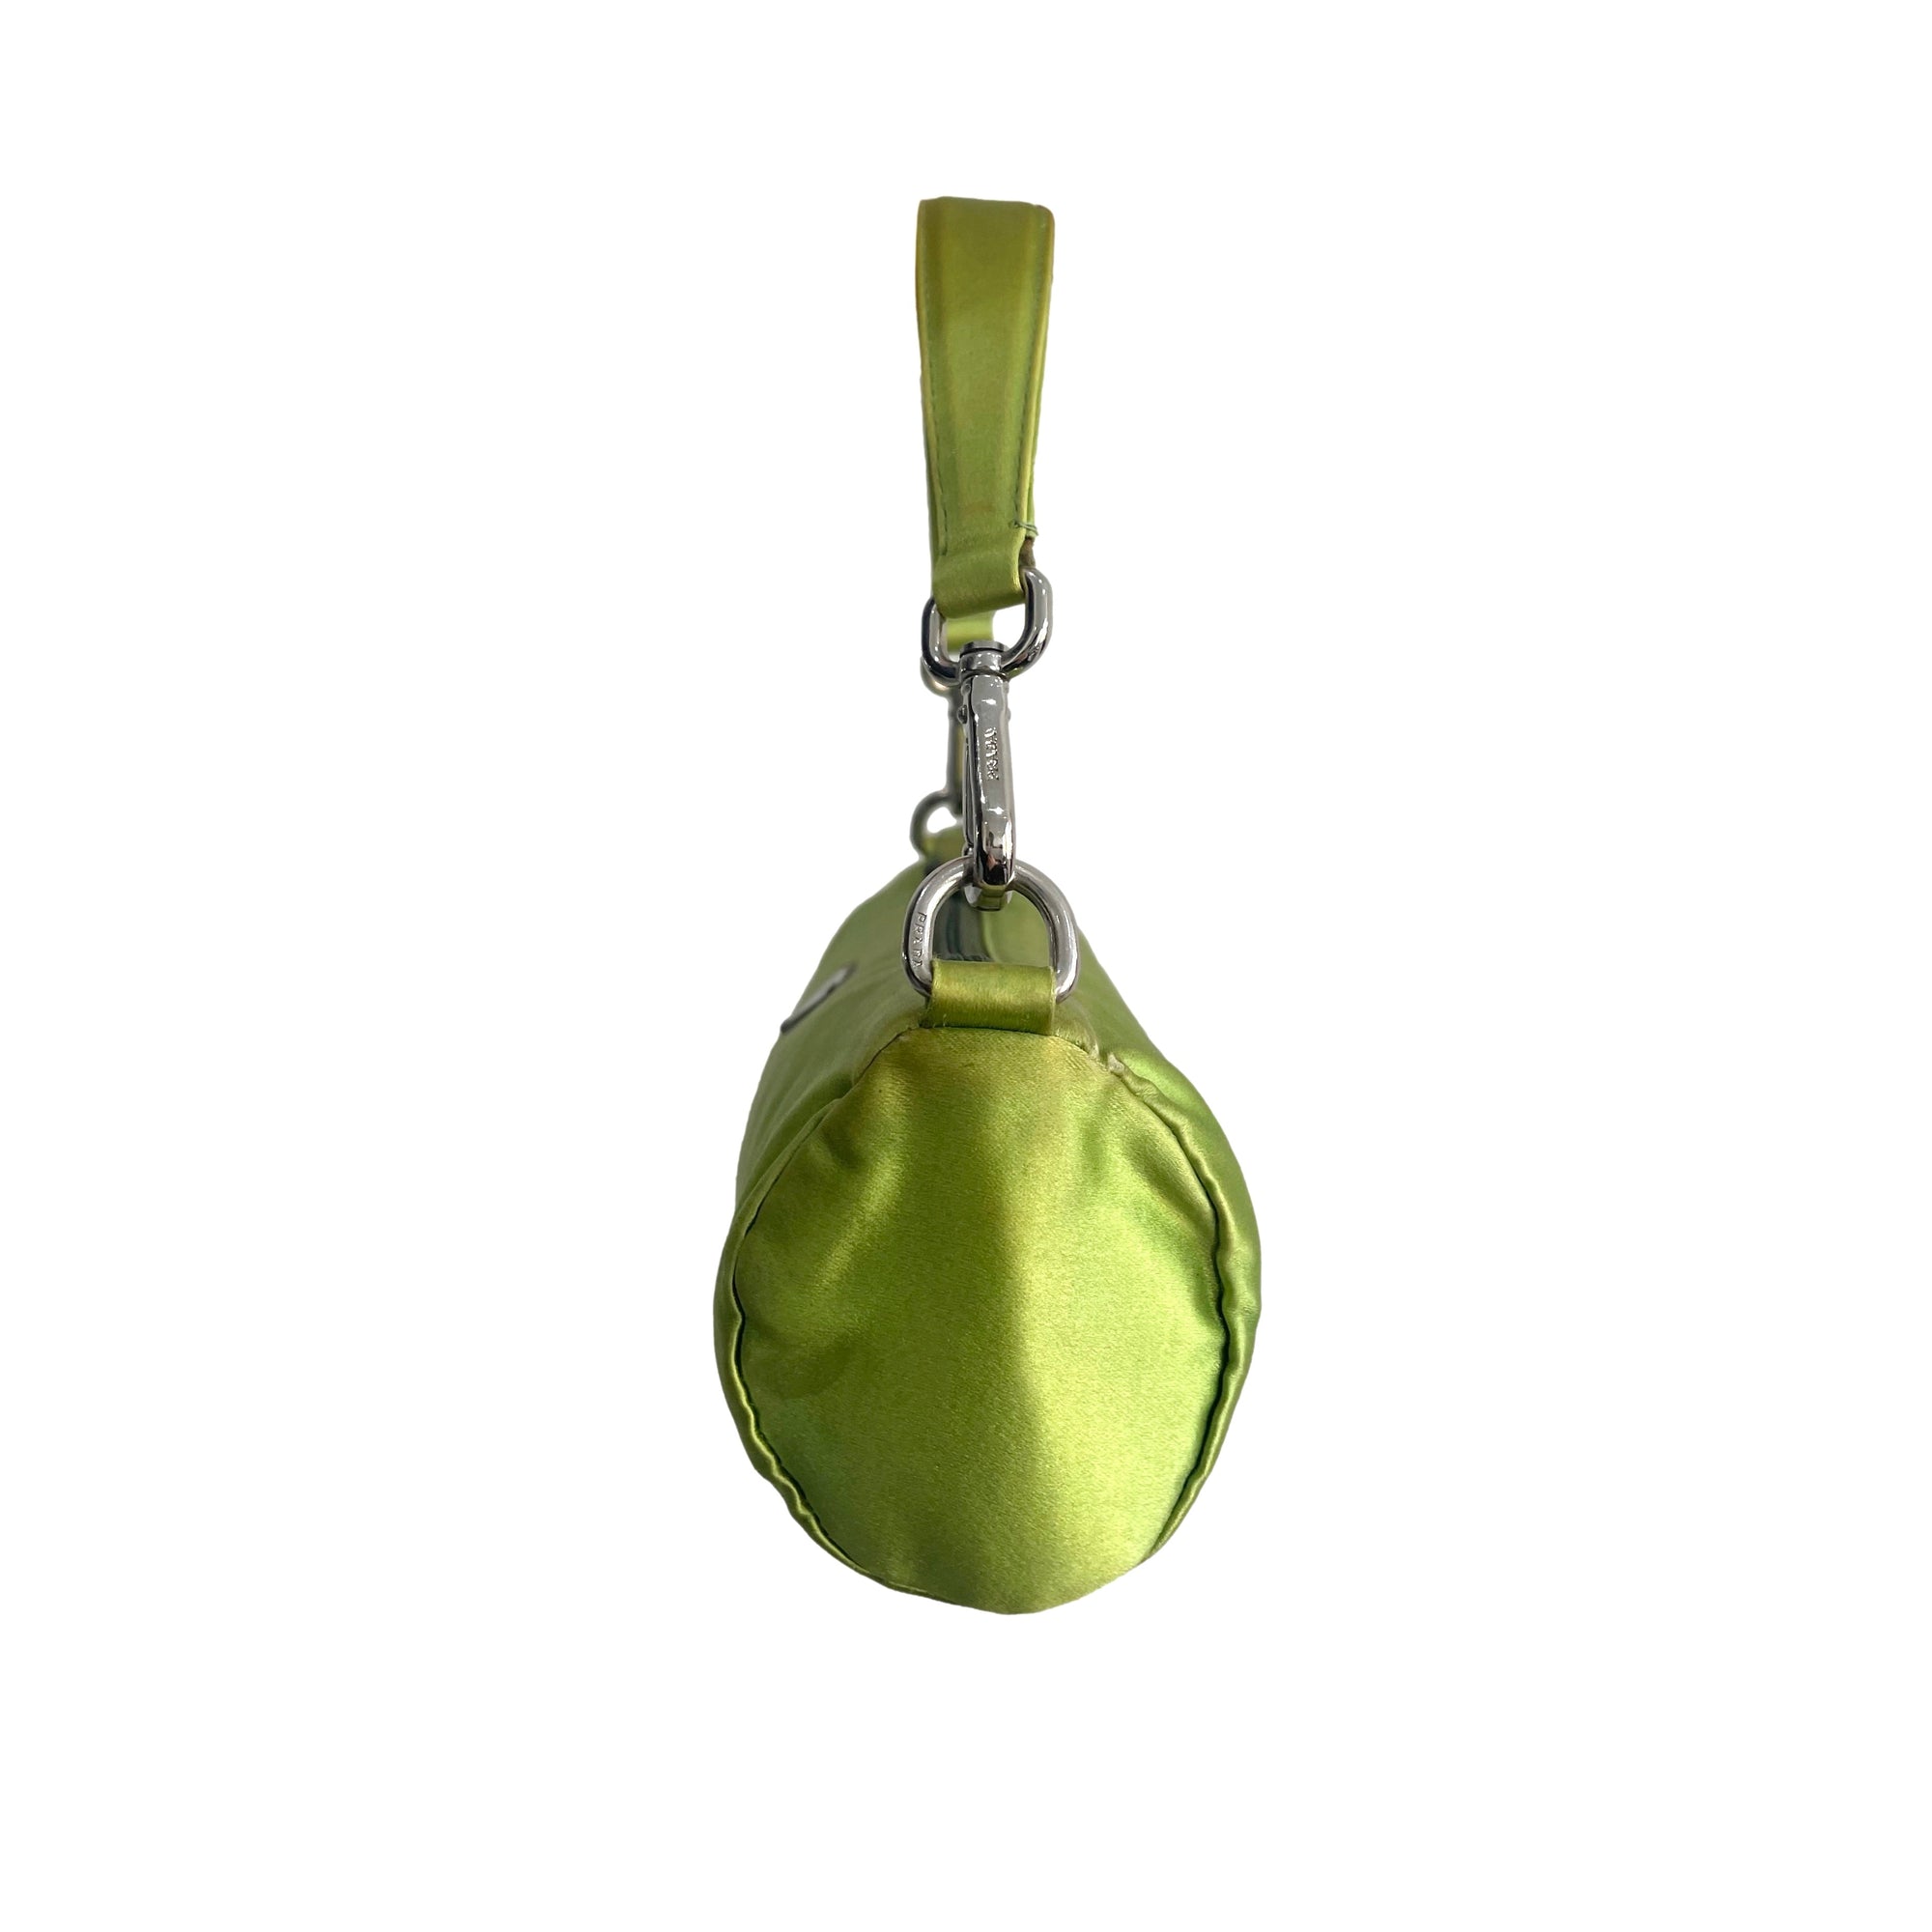 Prada Lime Green Satin Mini Bag - Handbags